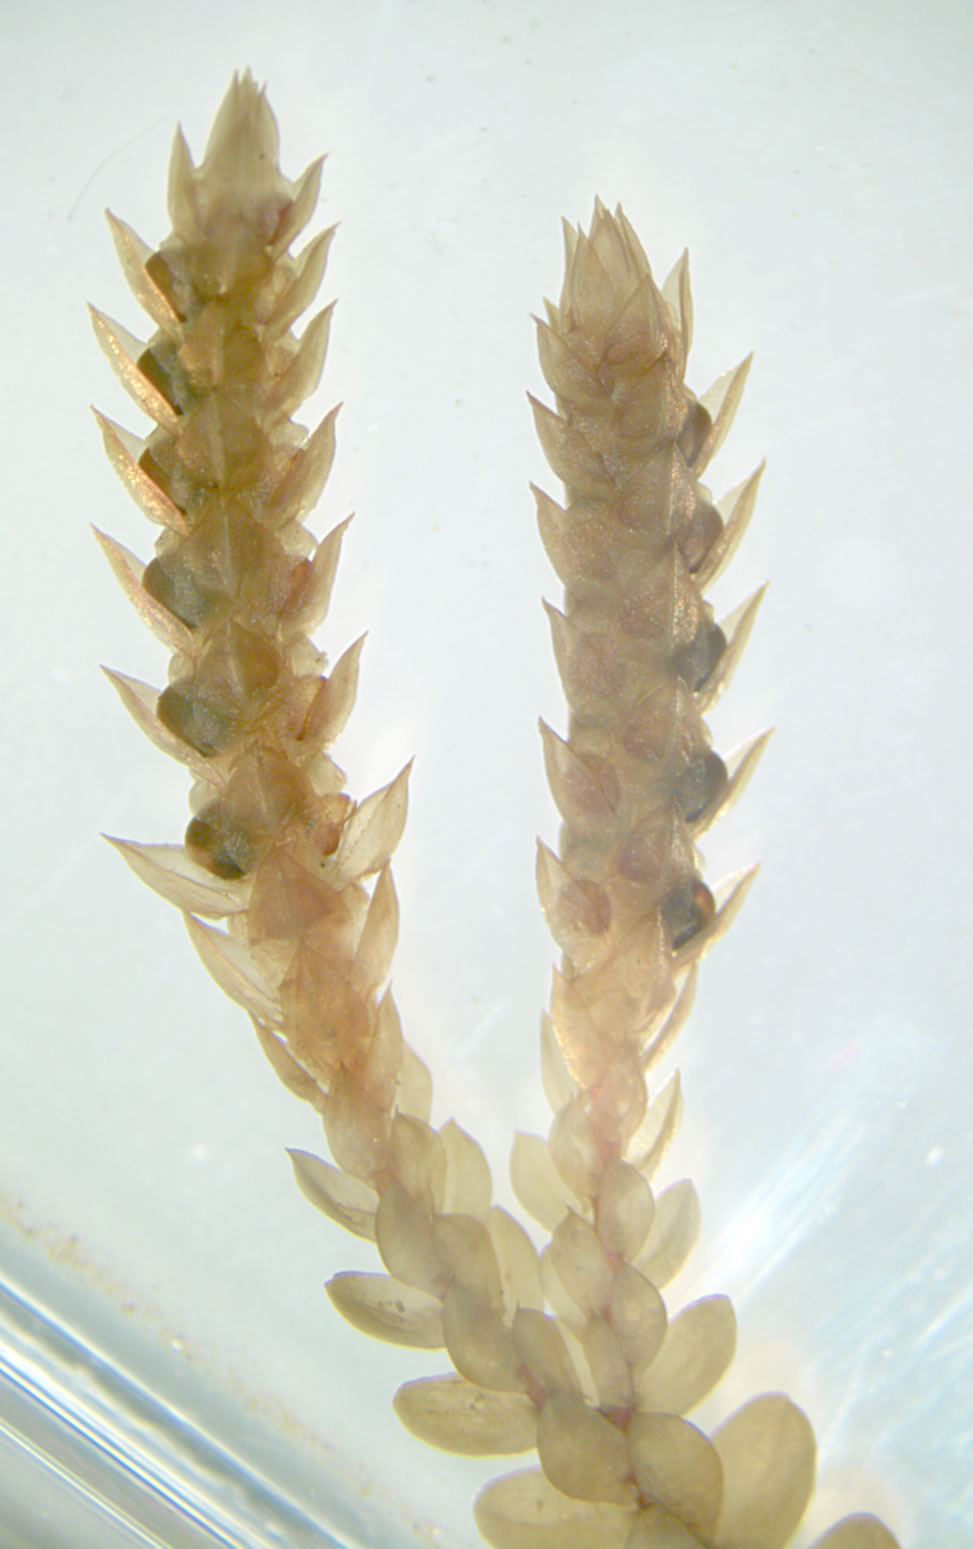 Dos Selaginella strobili con esporangios de aspecto diferente